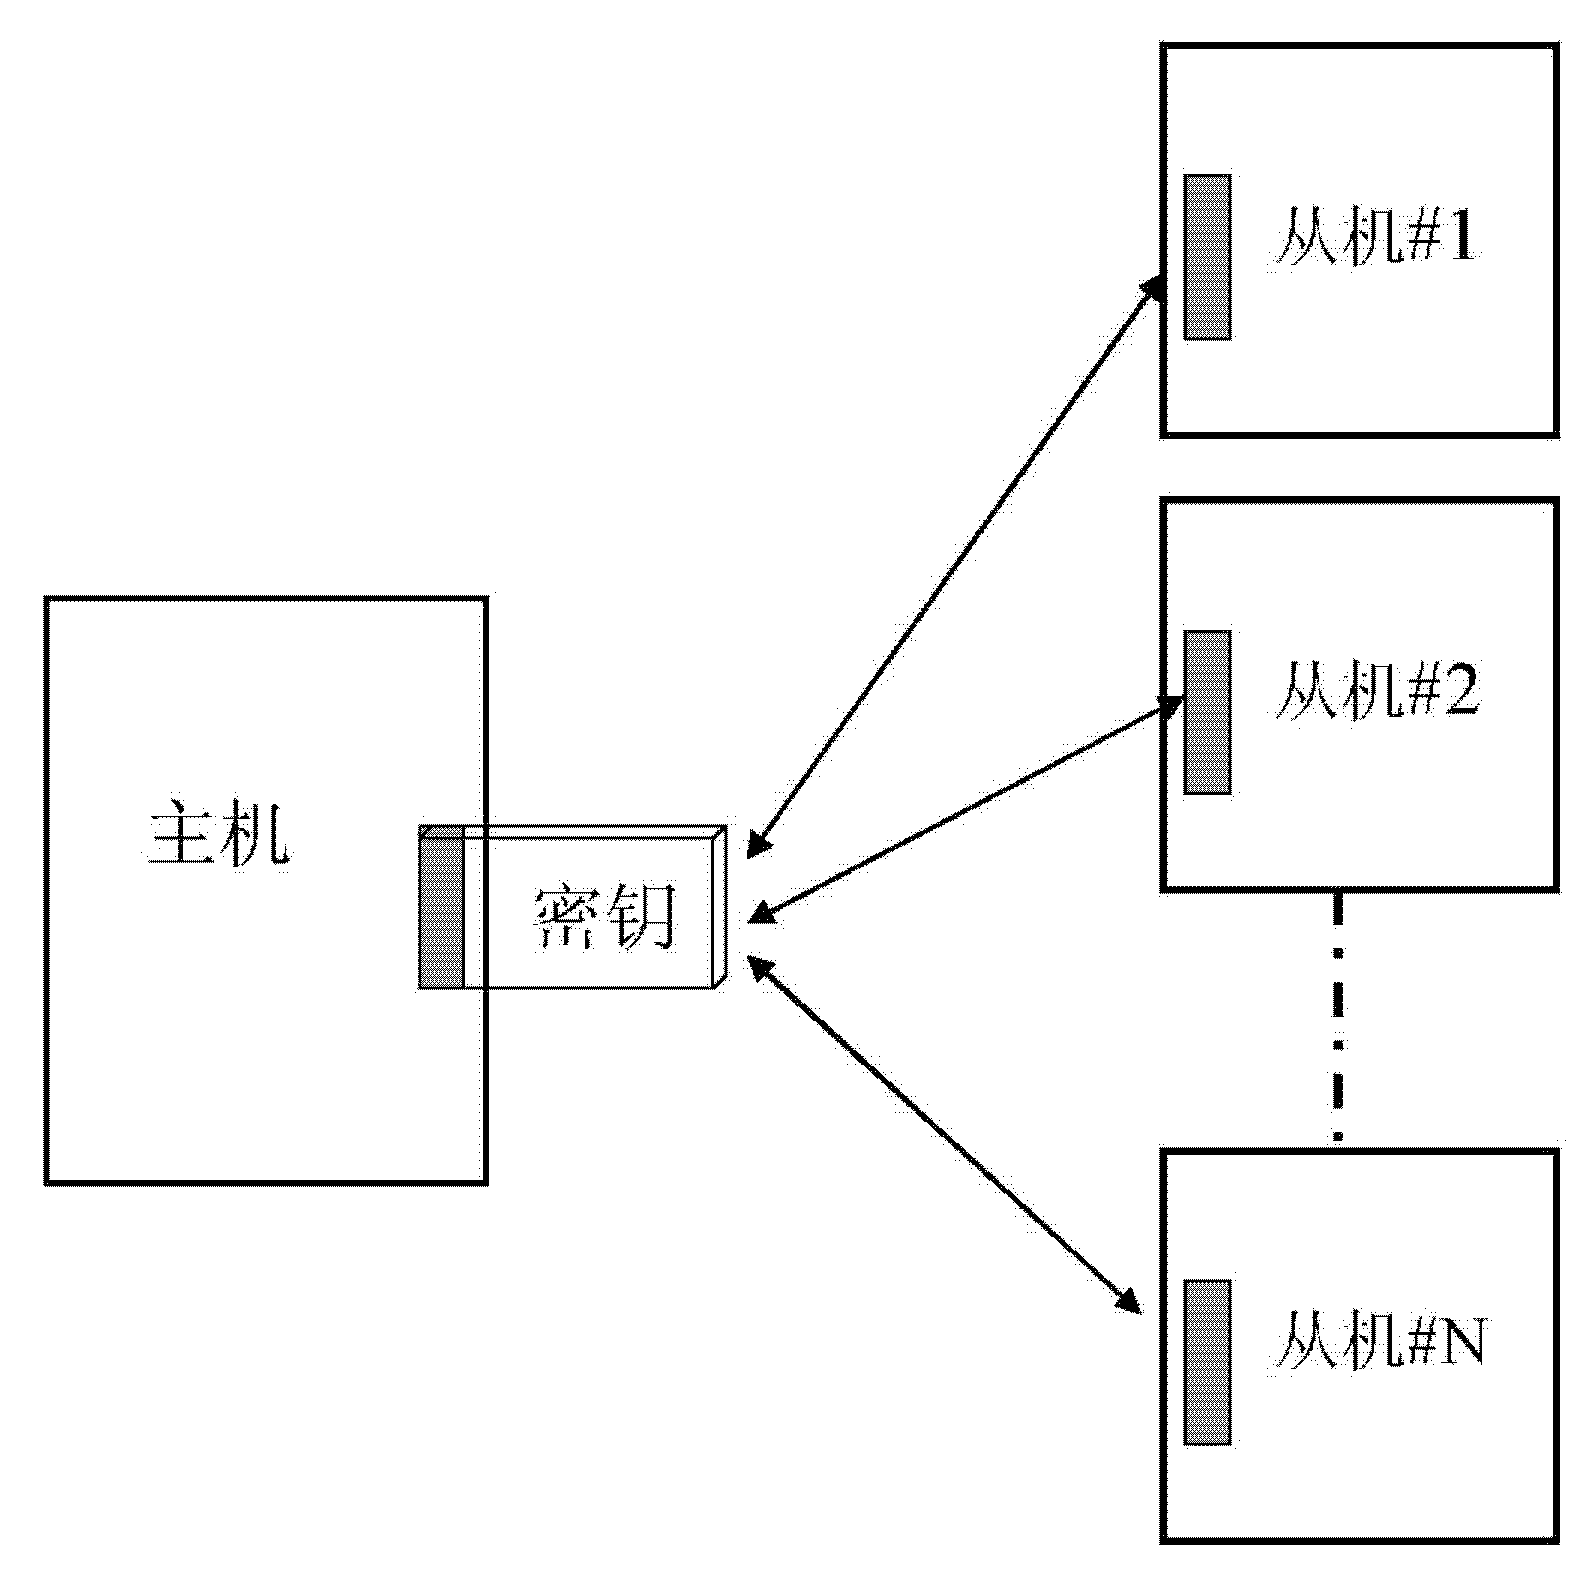 Networking method of wireless network